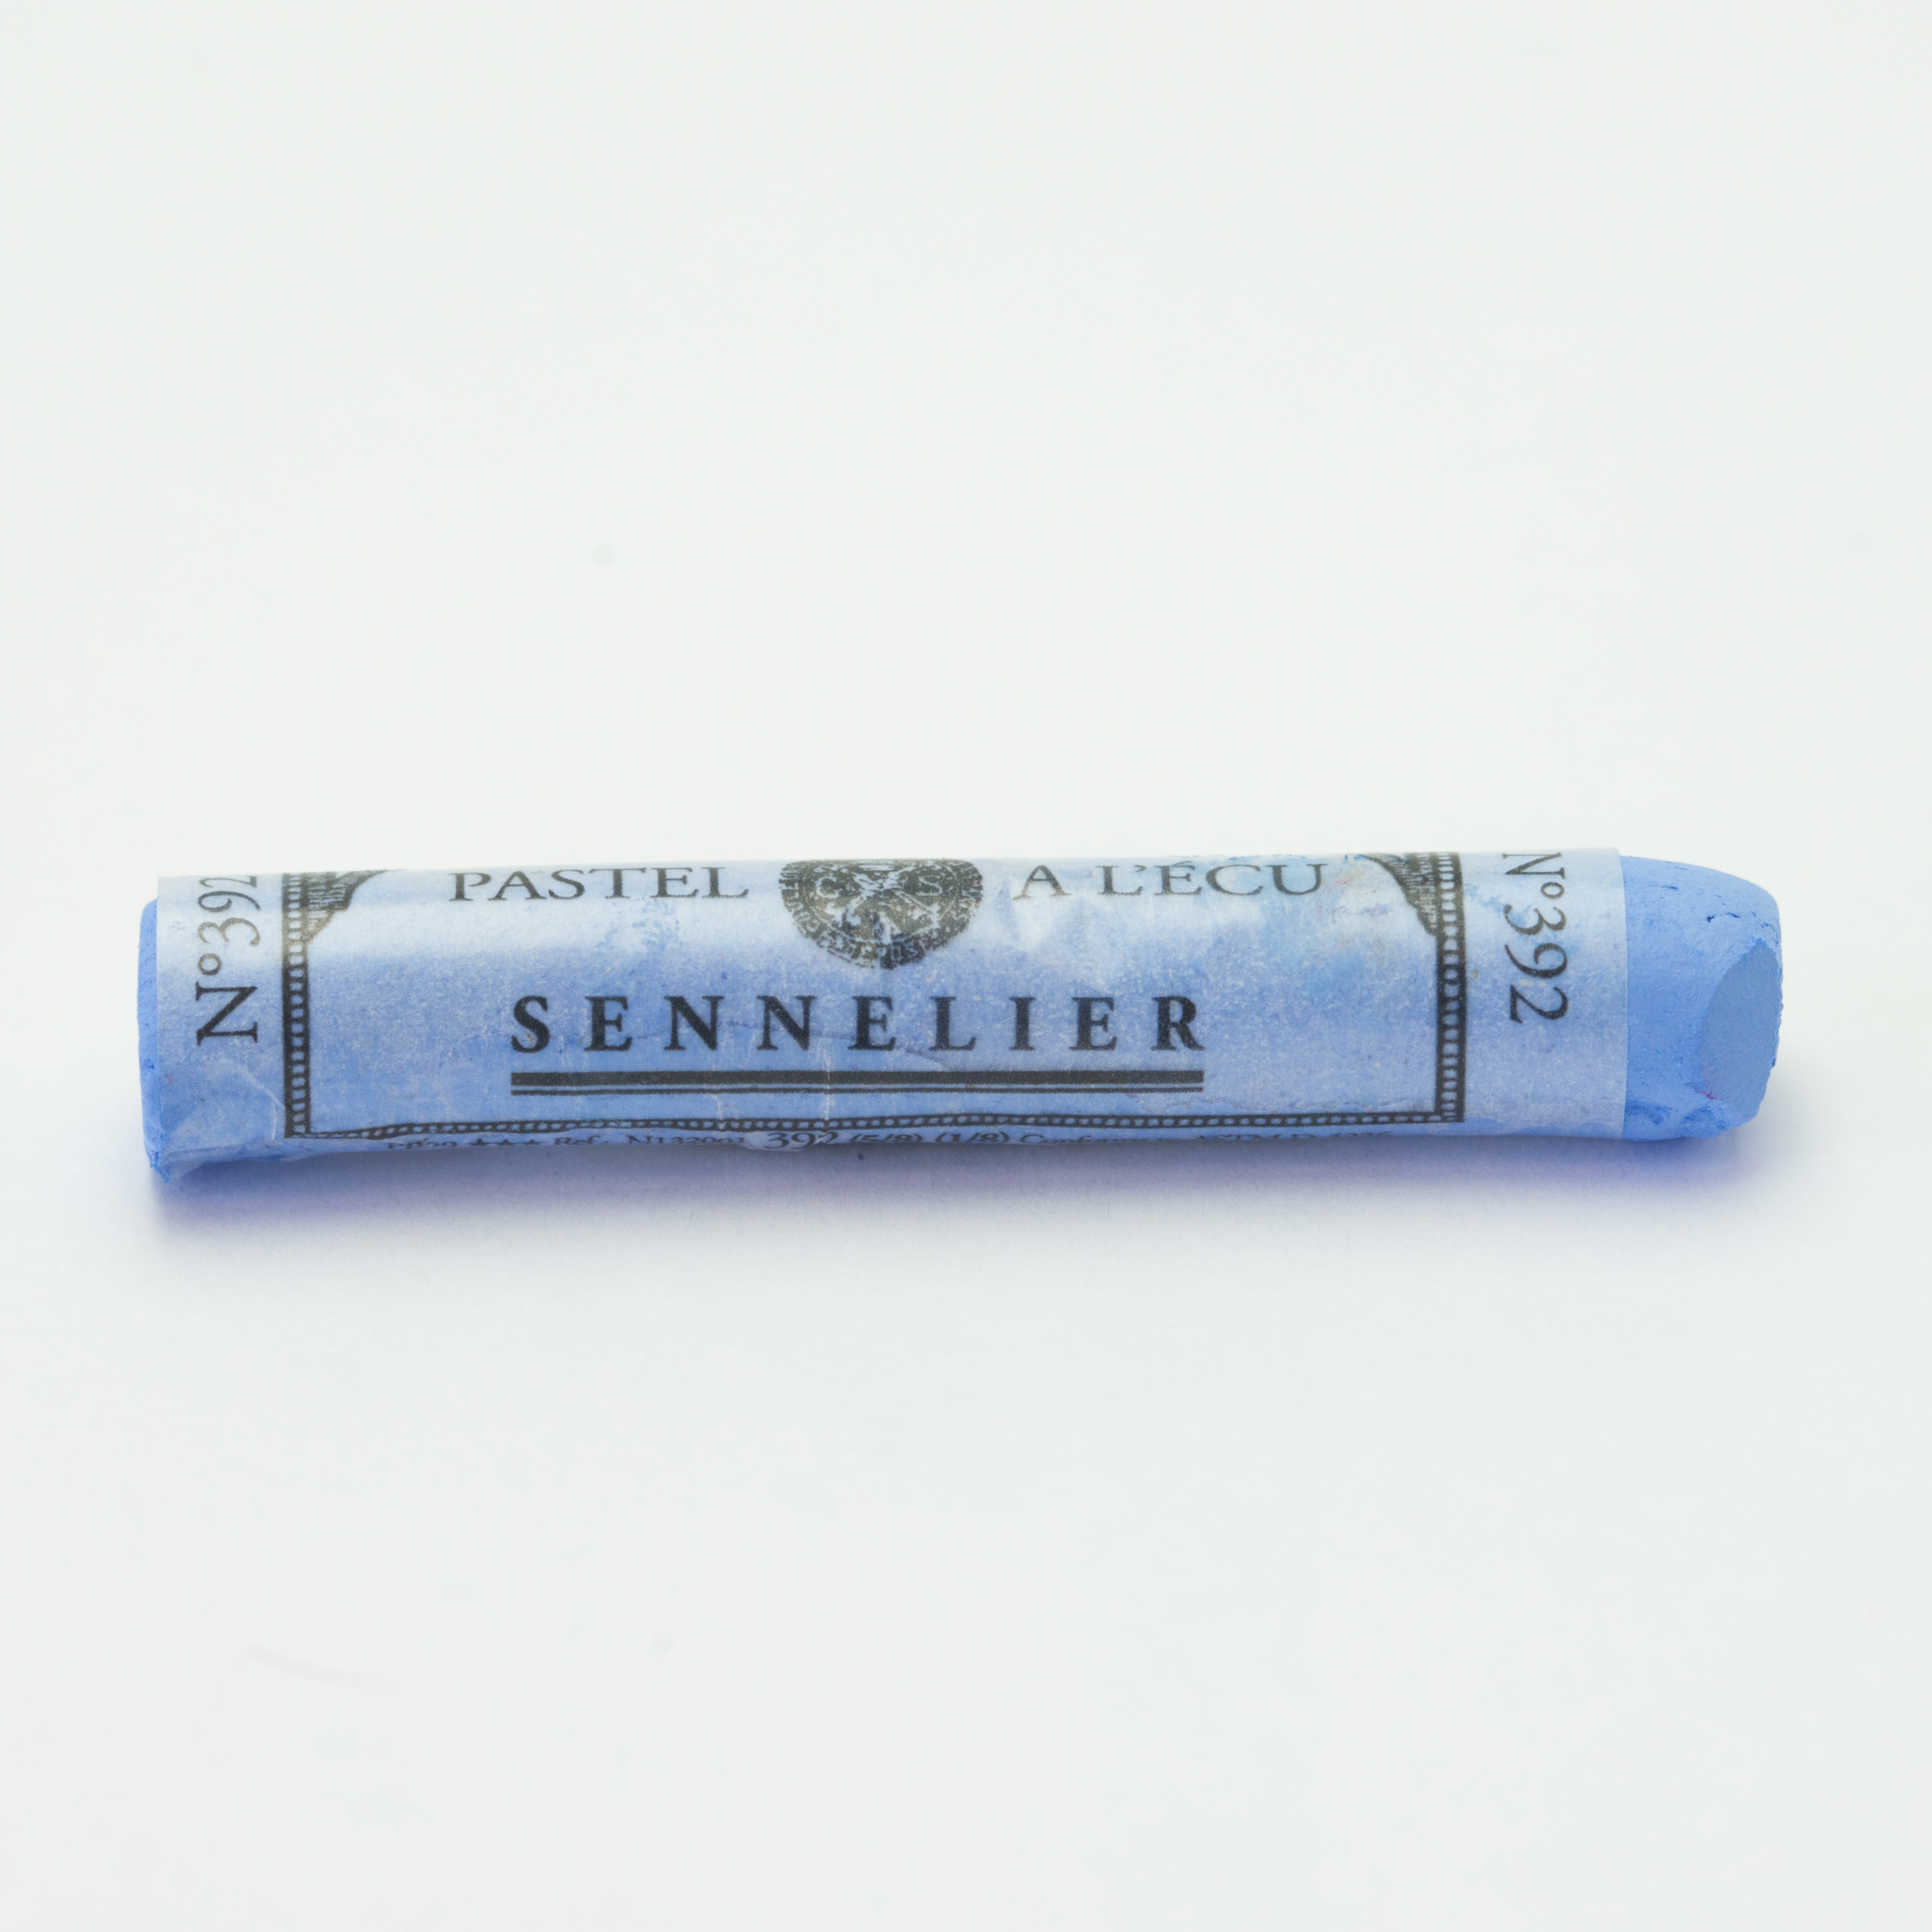 Sennelier Extra Soft Pastels - Ultramarine Blue 392